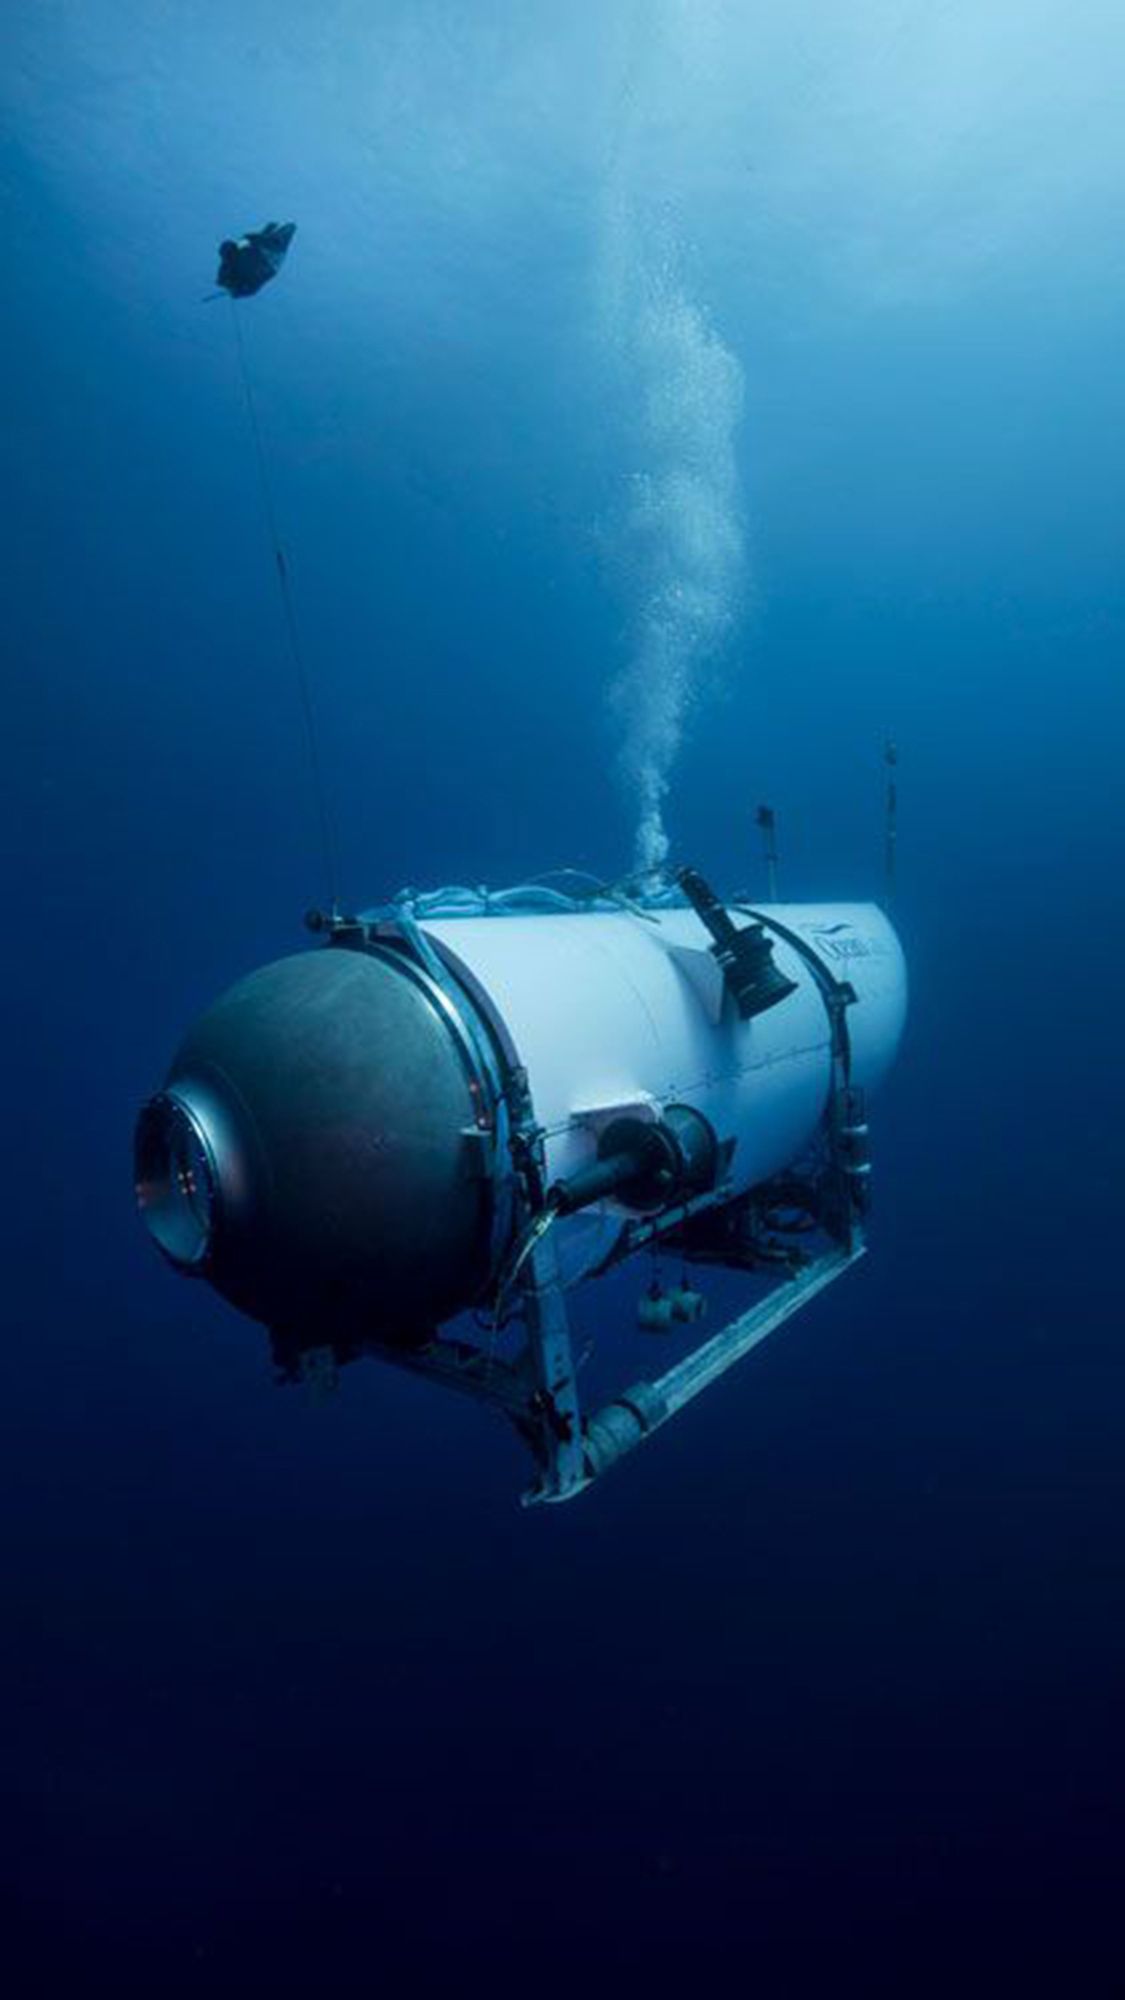 titan passenger suleman dawood took rubik's cube on board sub to break world record